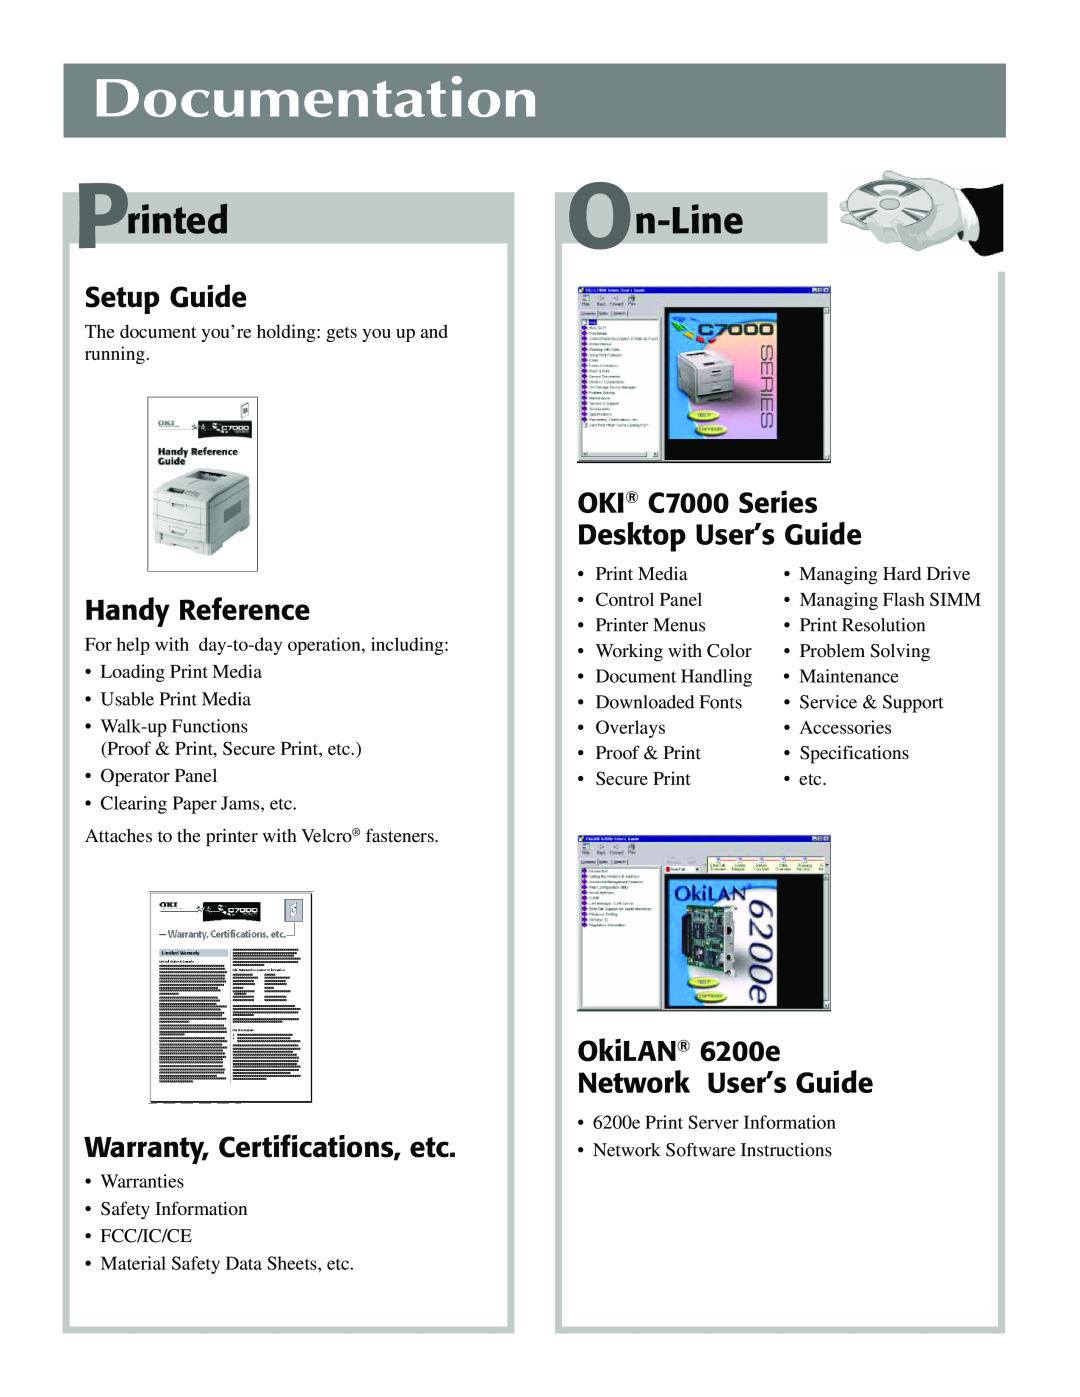 Oki Printed, On-Line, Setup Guide, Handy Reference, Warranty, Certifications, etc, OKI C7000 Series, OkiLAN 6200e 